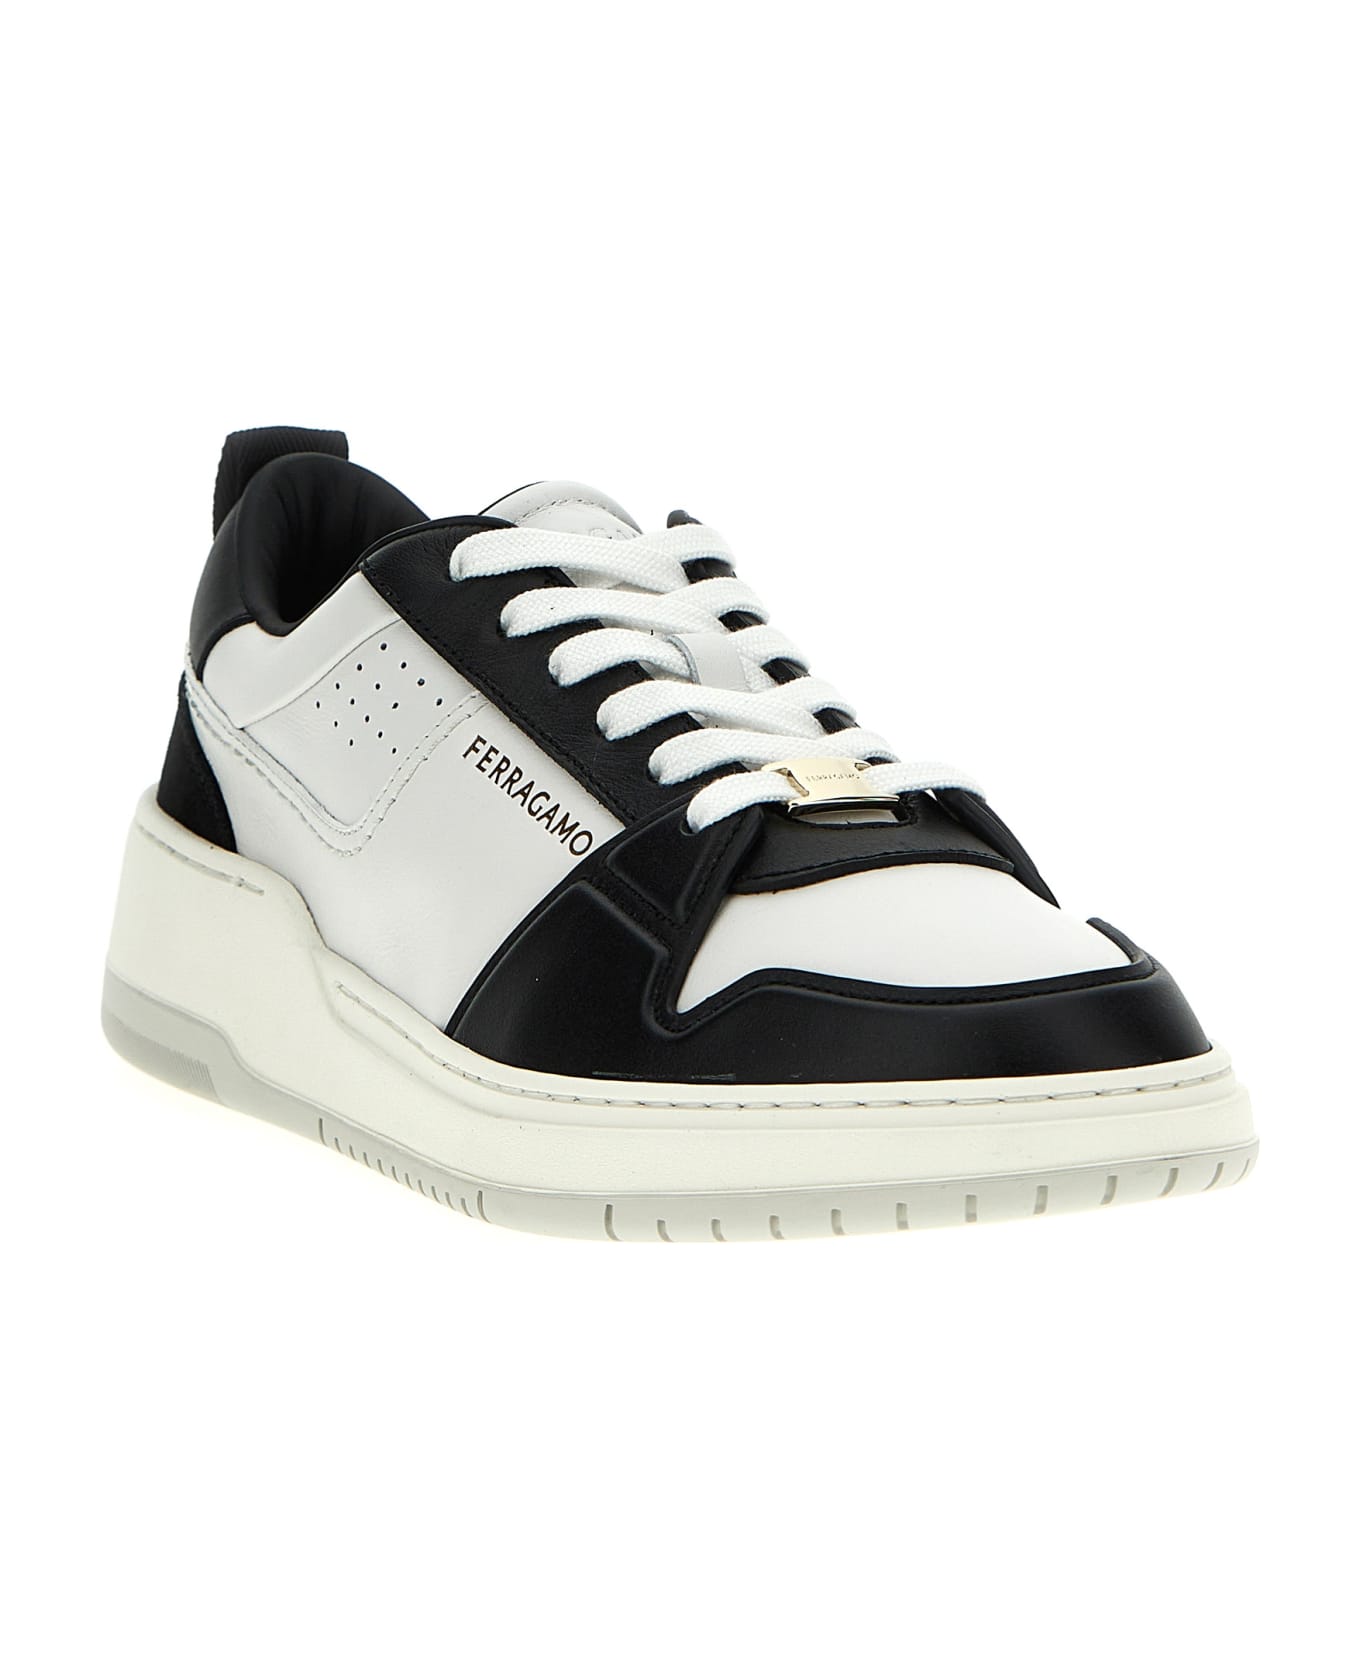 Ferragamo Two-tone Leather Sneakers - White/Black スニーカー